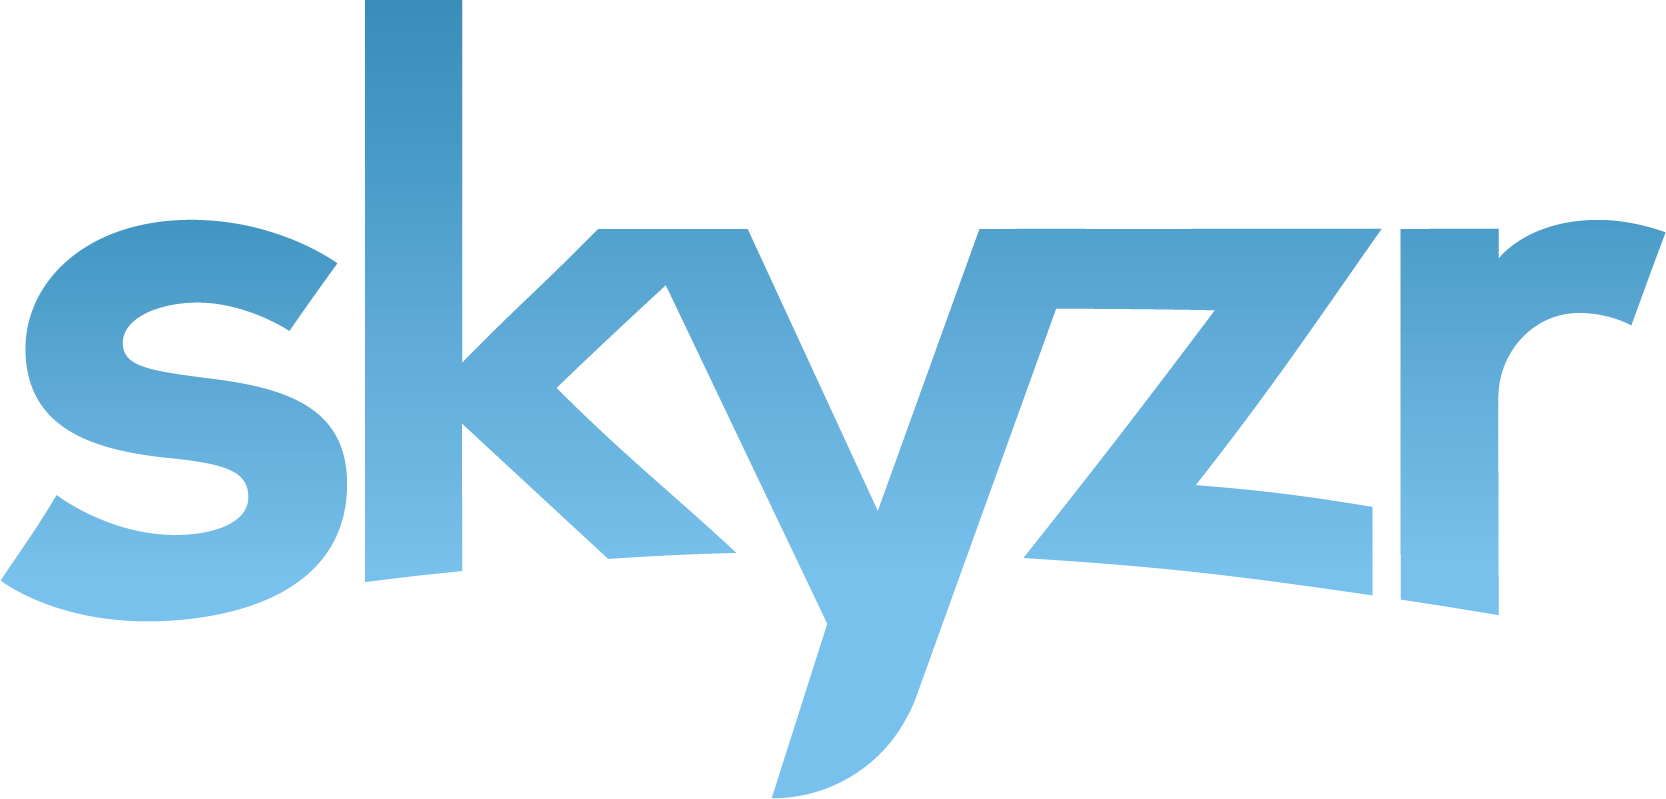 skyzr logo